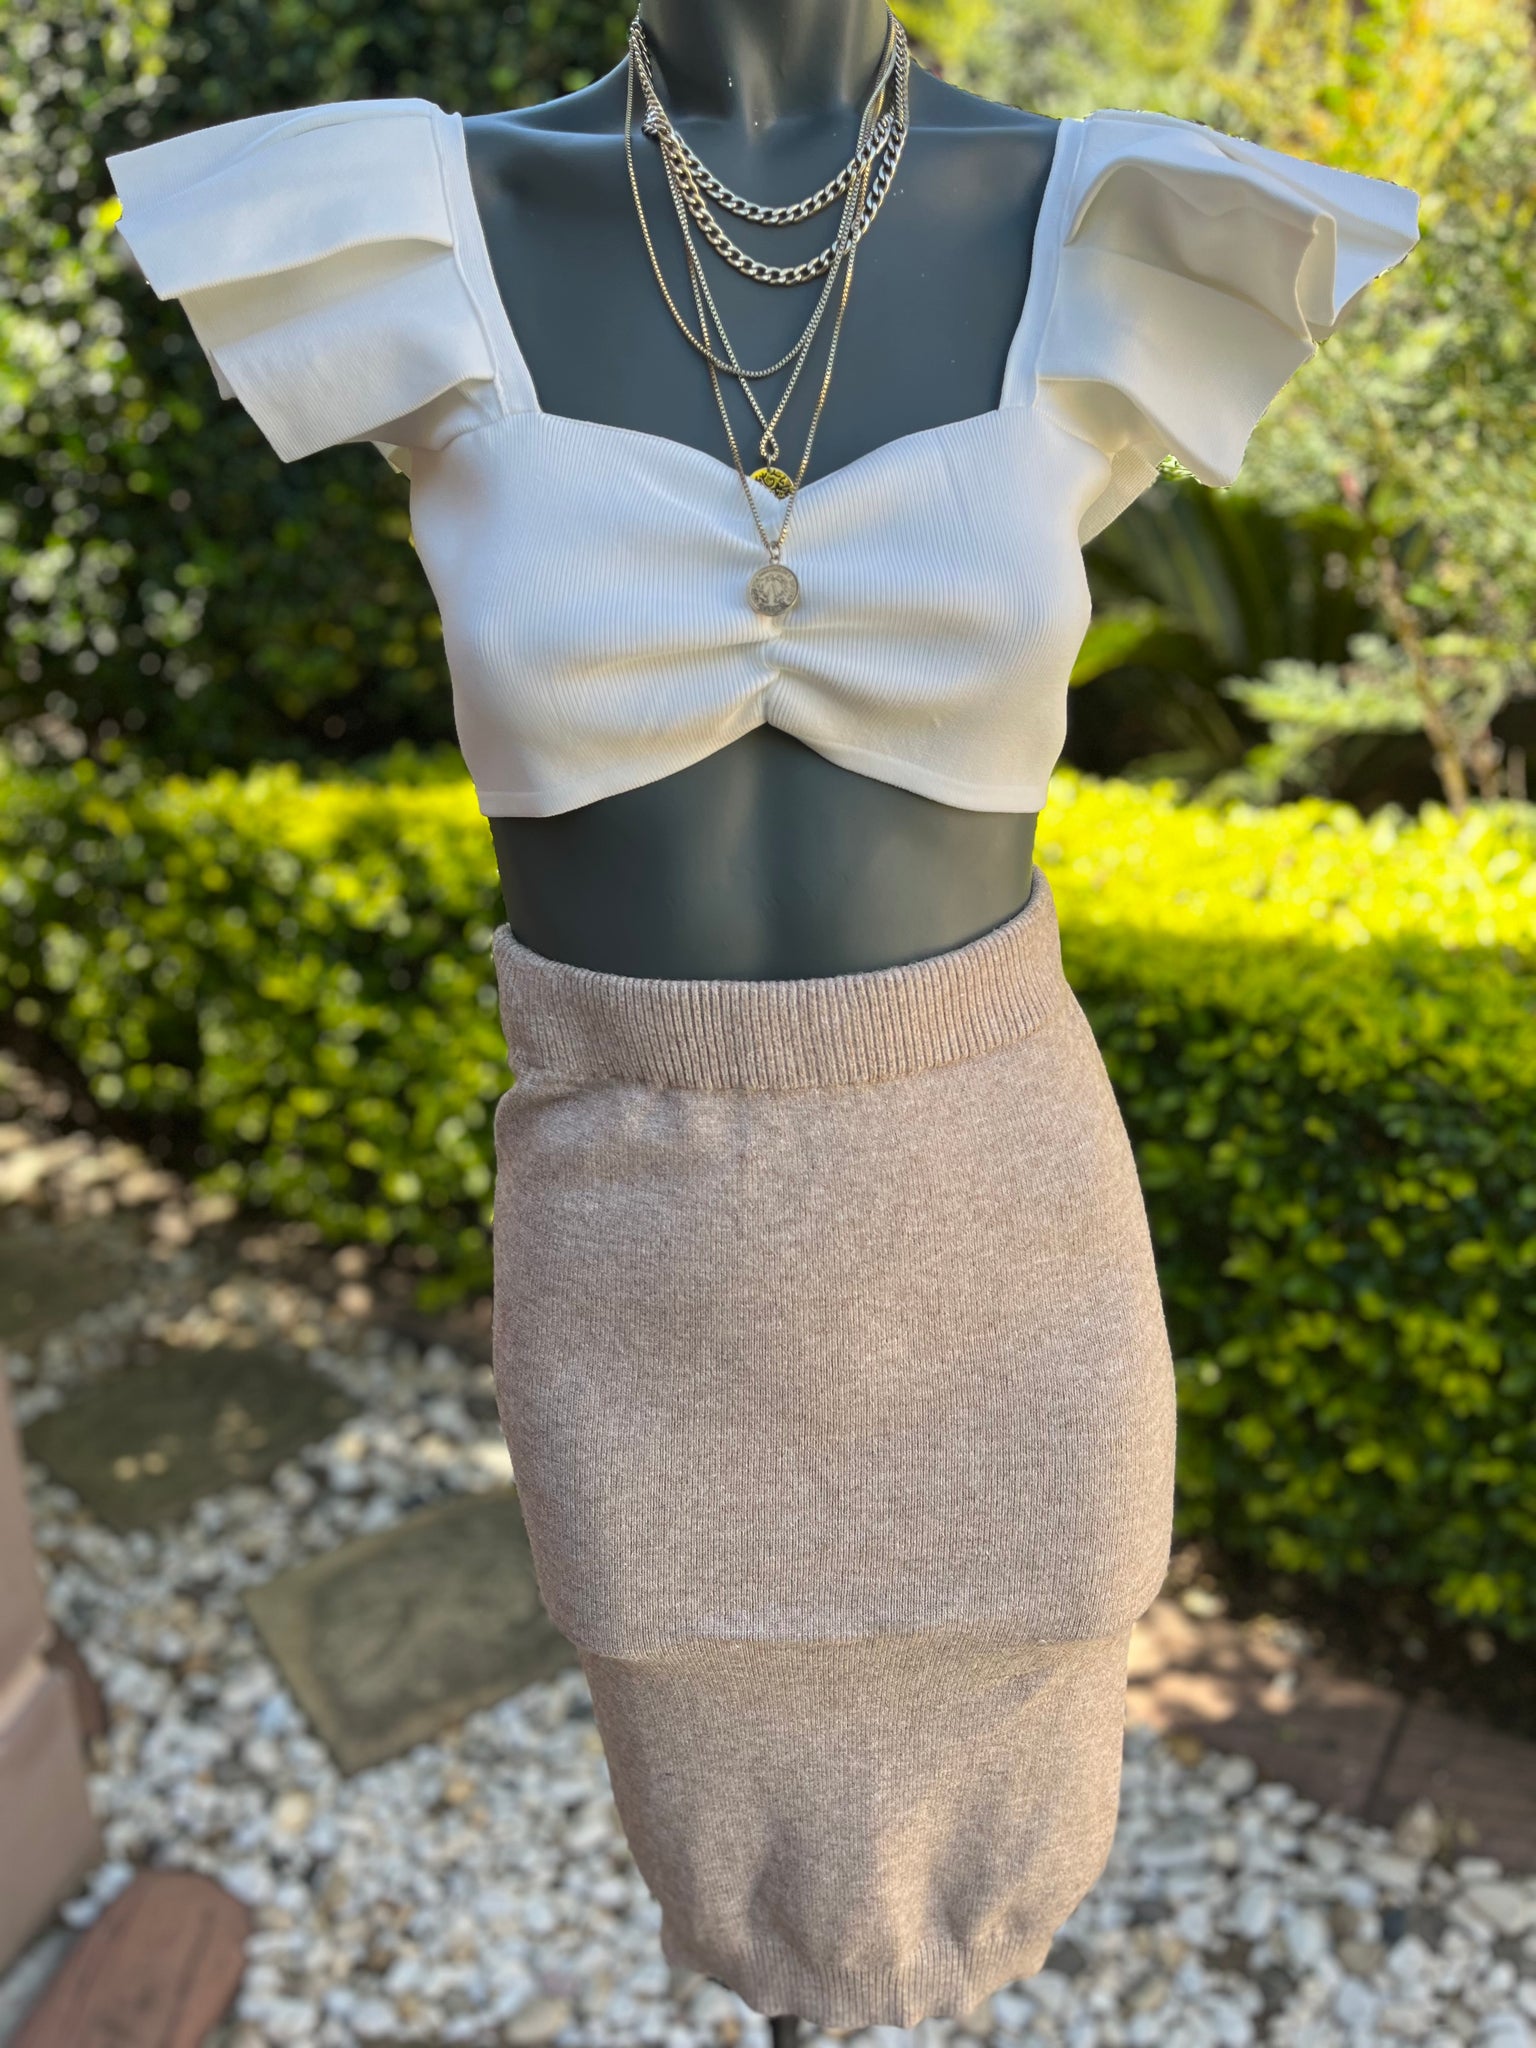 Brand New Beige Knitted High Waist Skirt - Size S/M